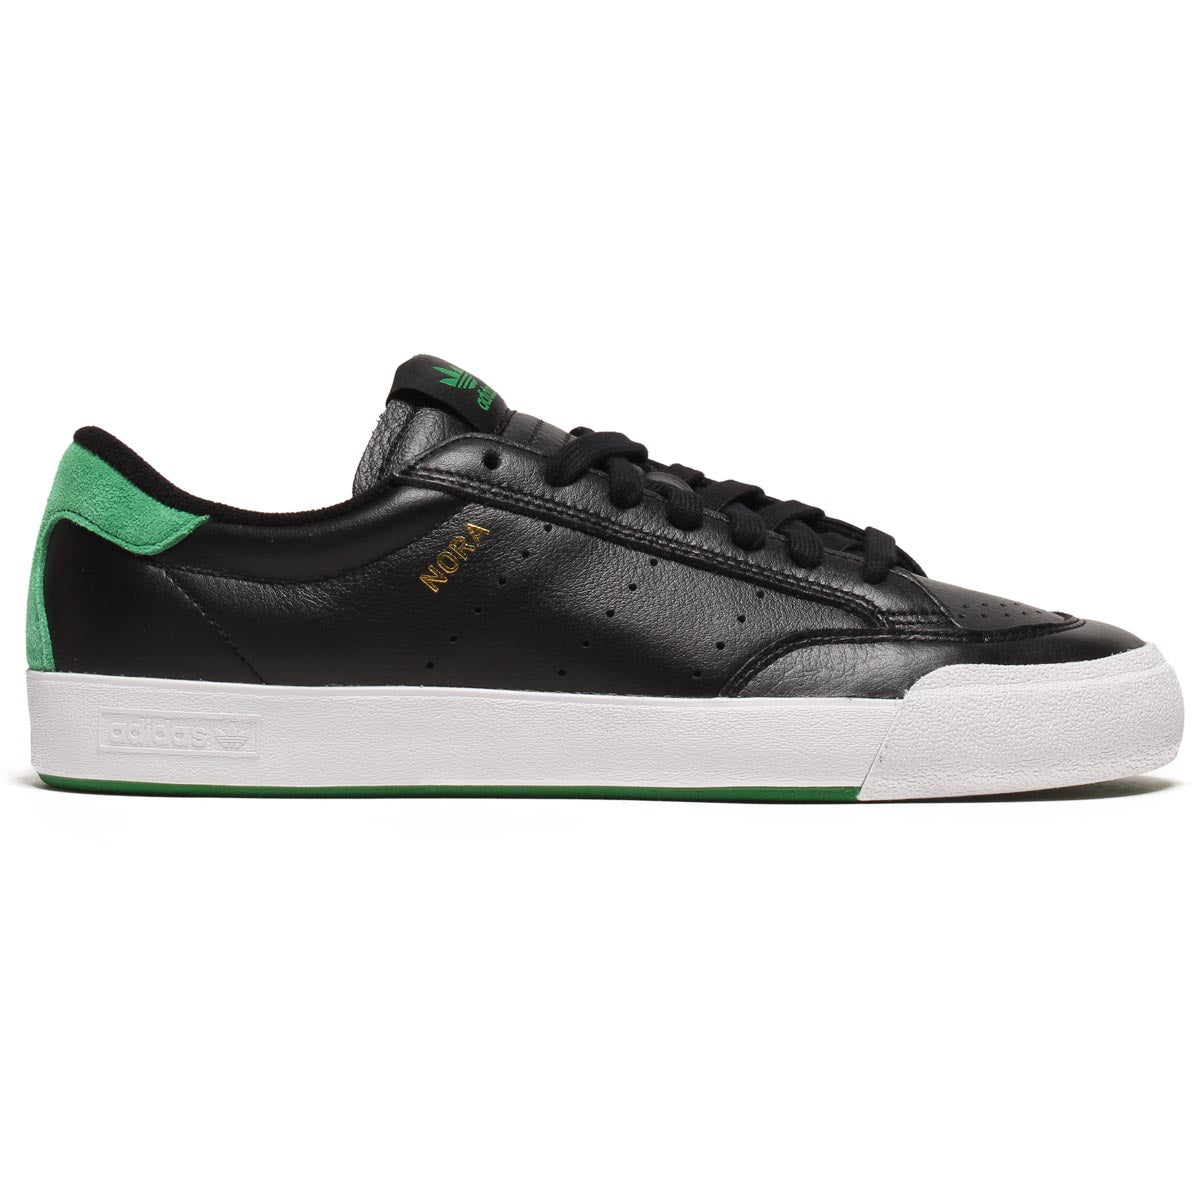 Adidas Nora Shoes - Black/Green/White image 1